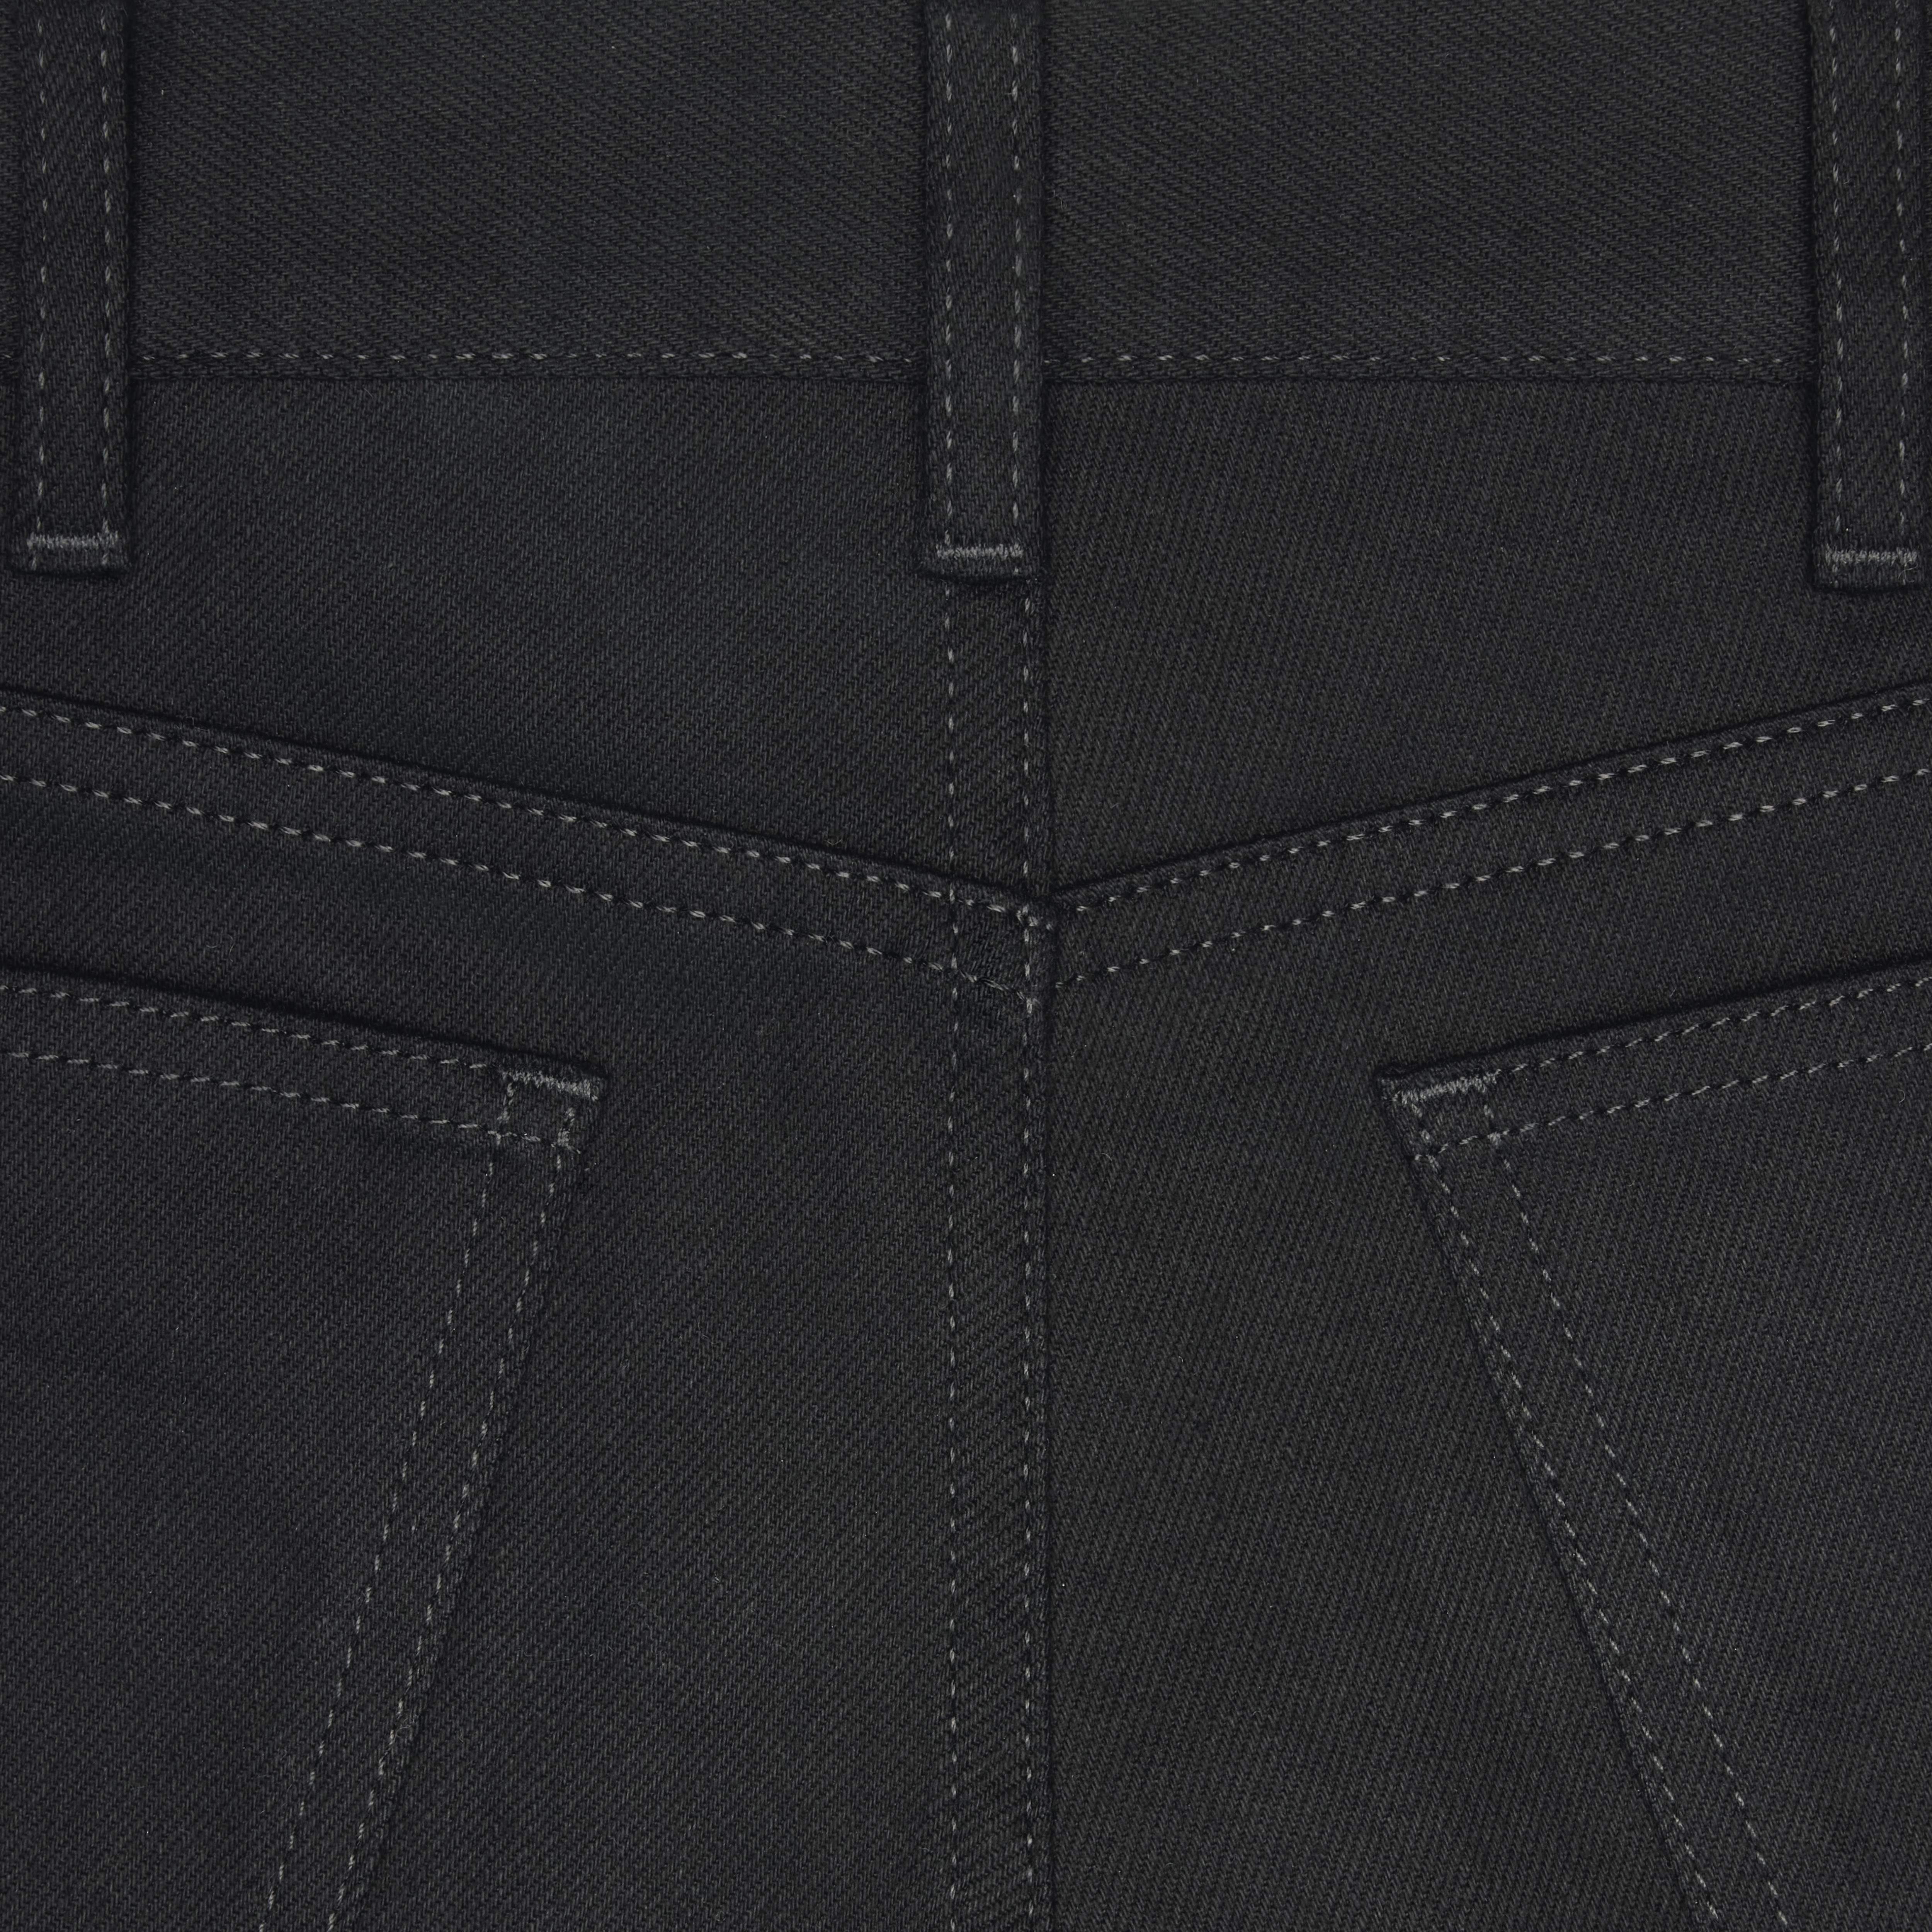 Neo skinny jeans in pure black wash denim - 3